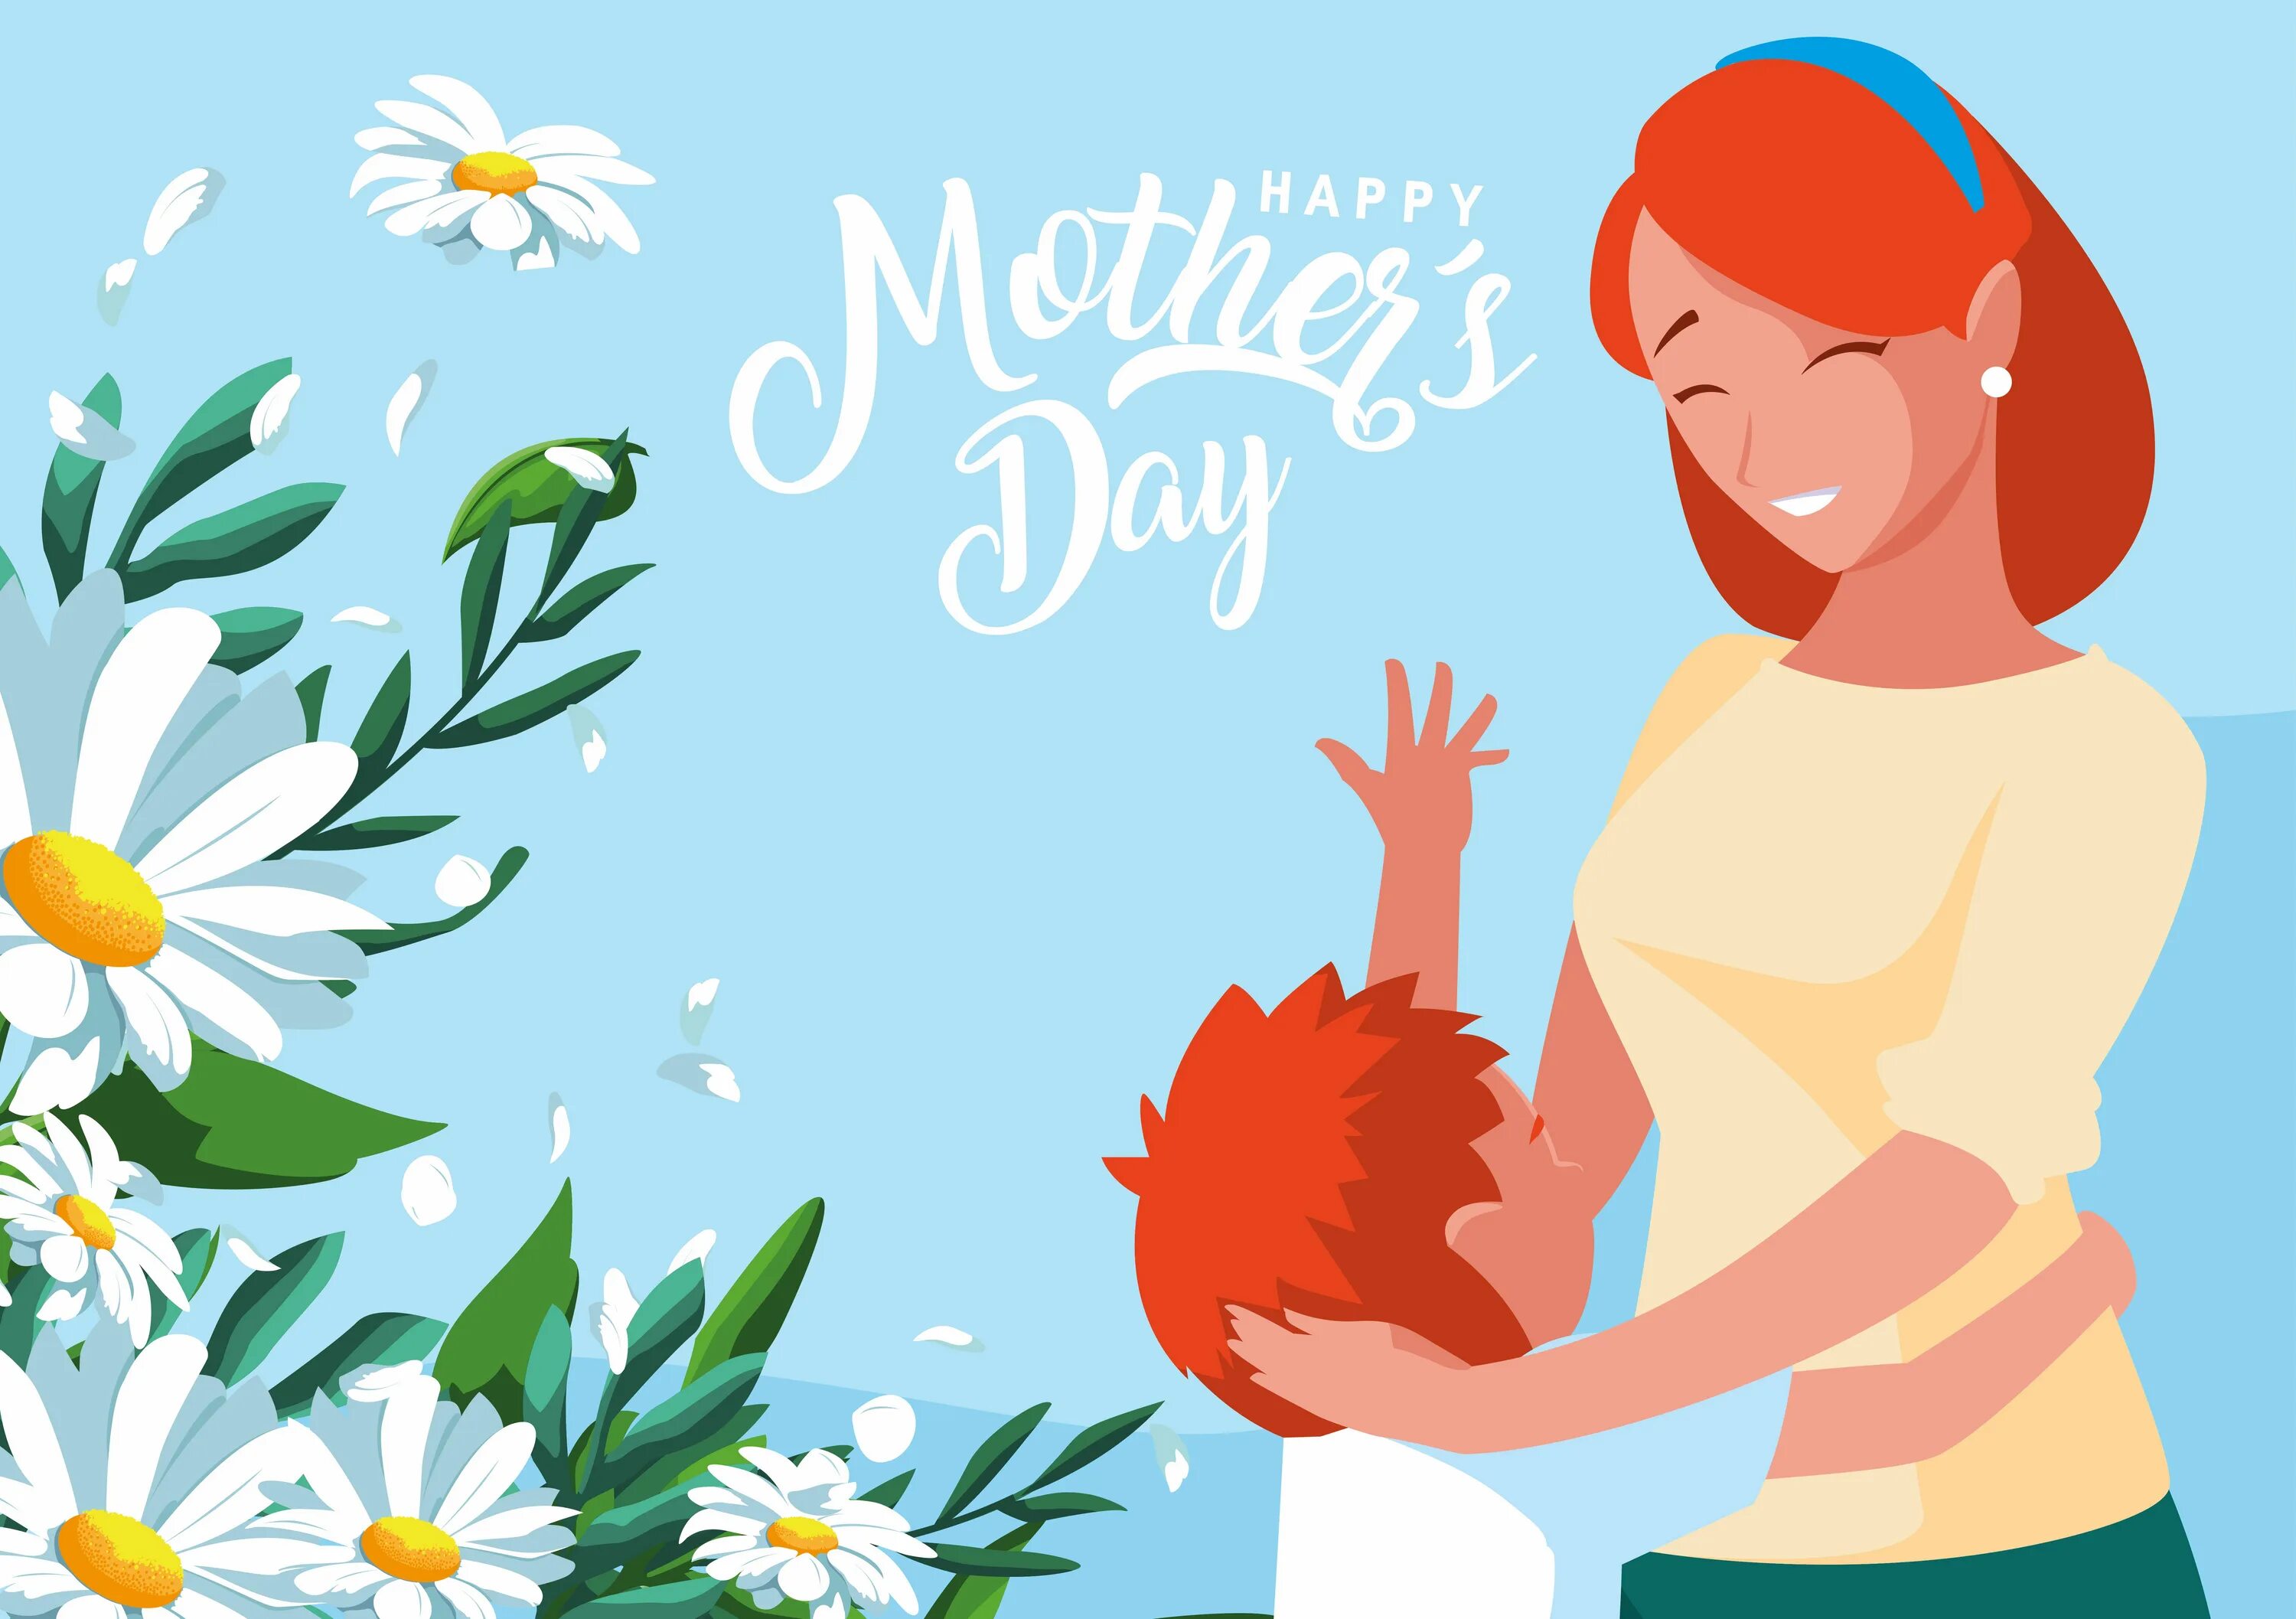 Фон к дню матери. Плакат ко Дню матери. День матери иллюстрации. Открытки с днём матери. День матери вектор.